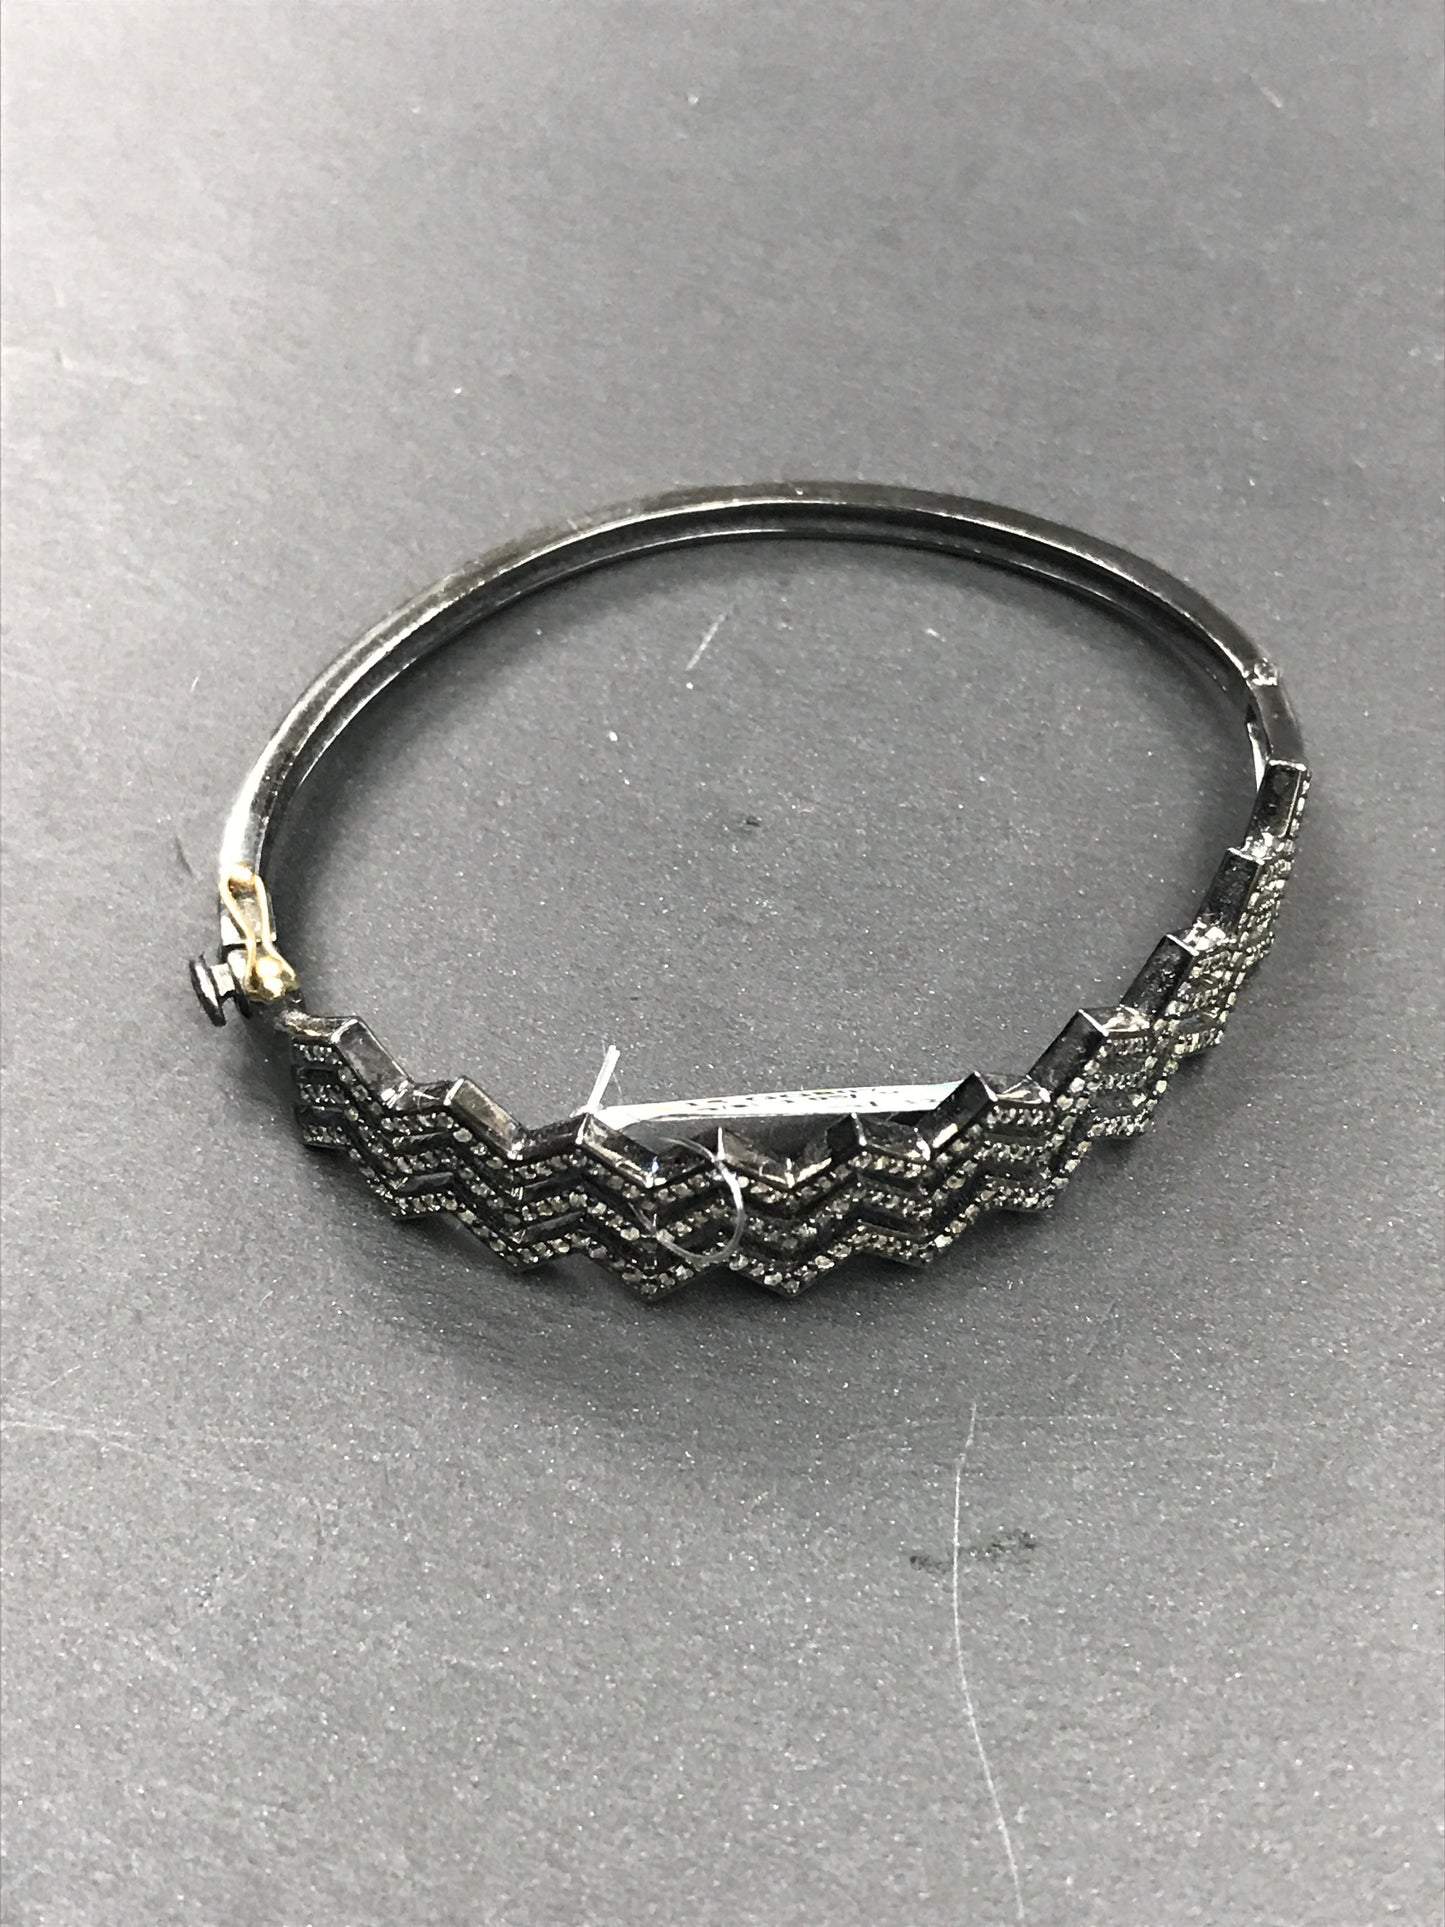 Diamond and Silver Black Rhodium Finish Bracelets